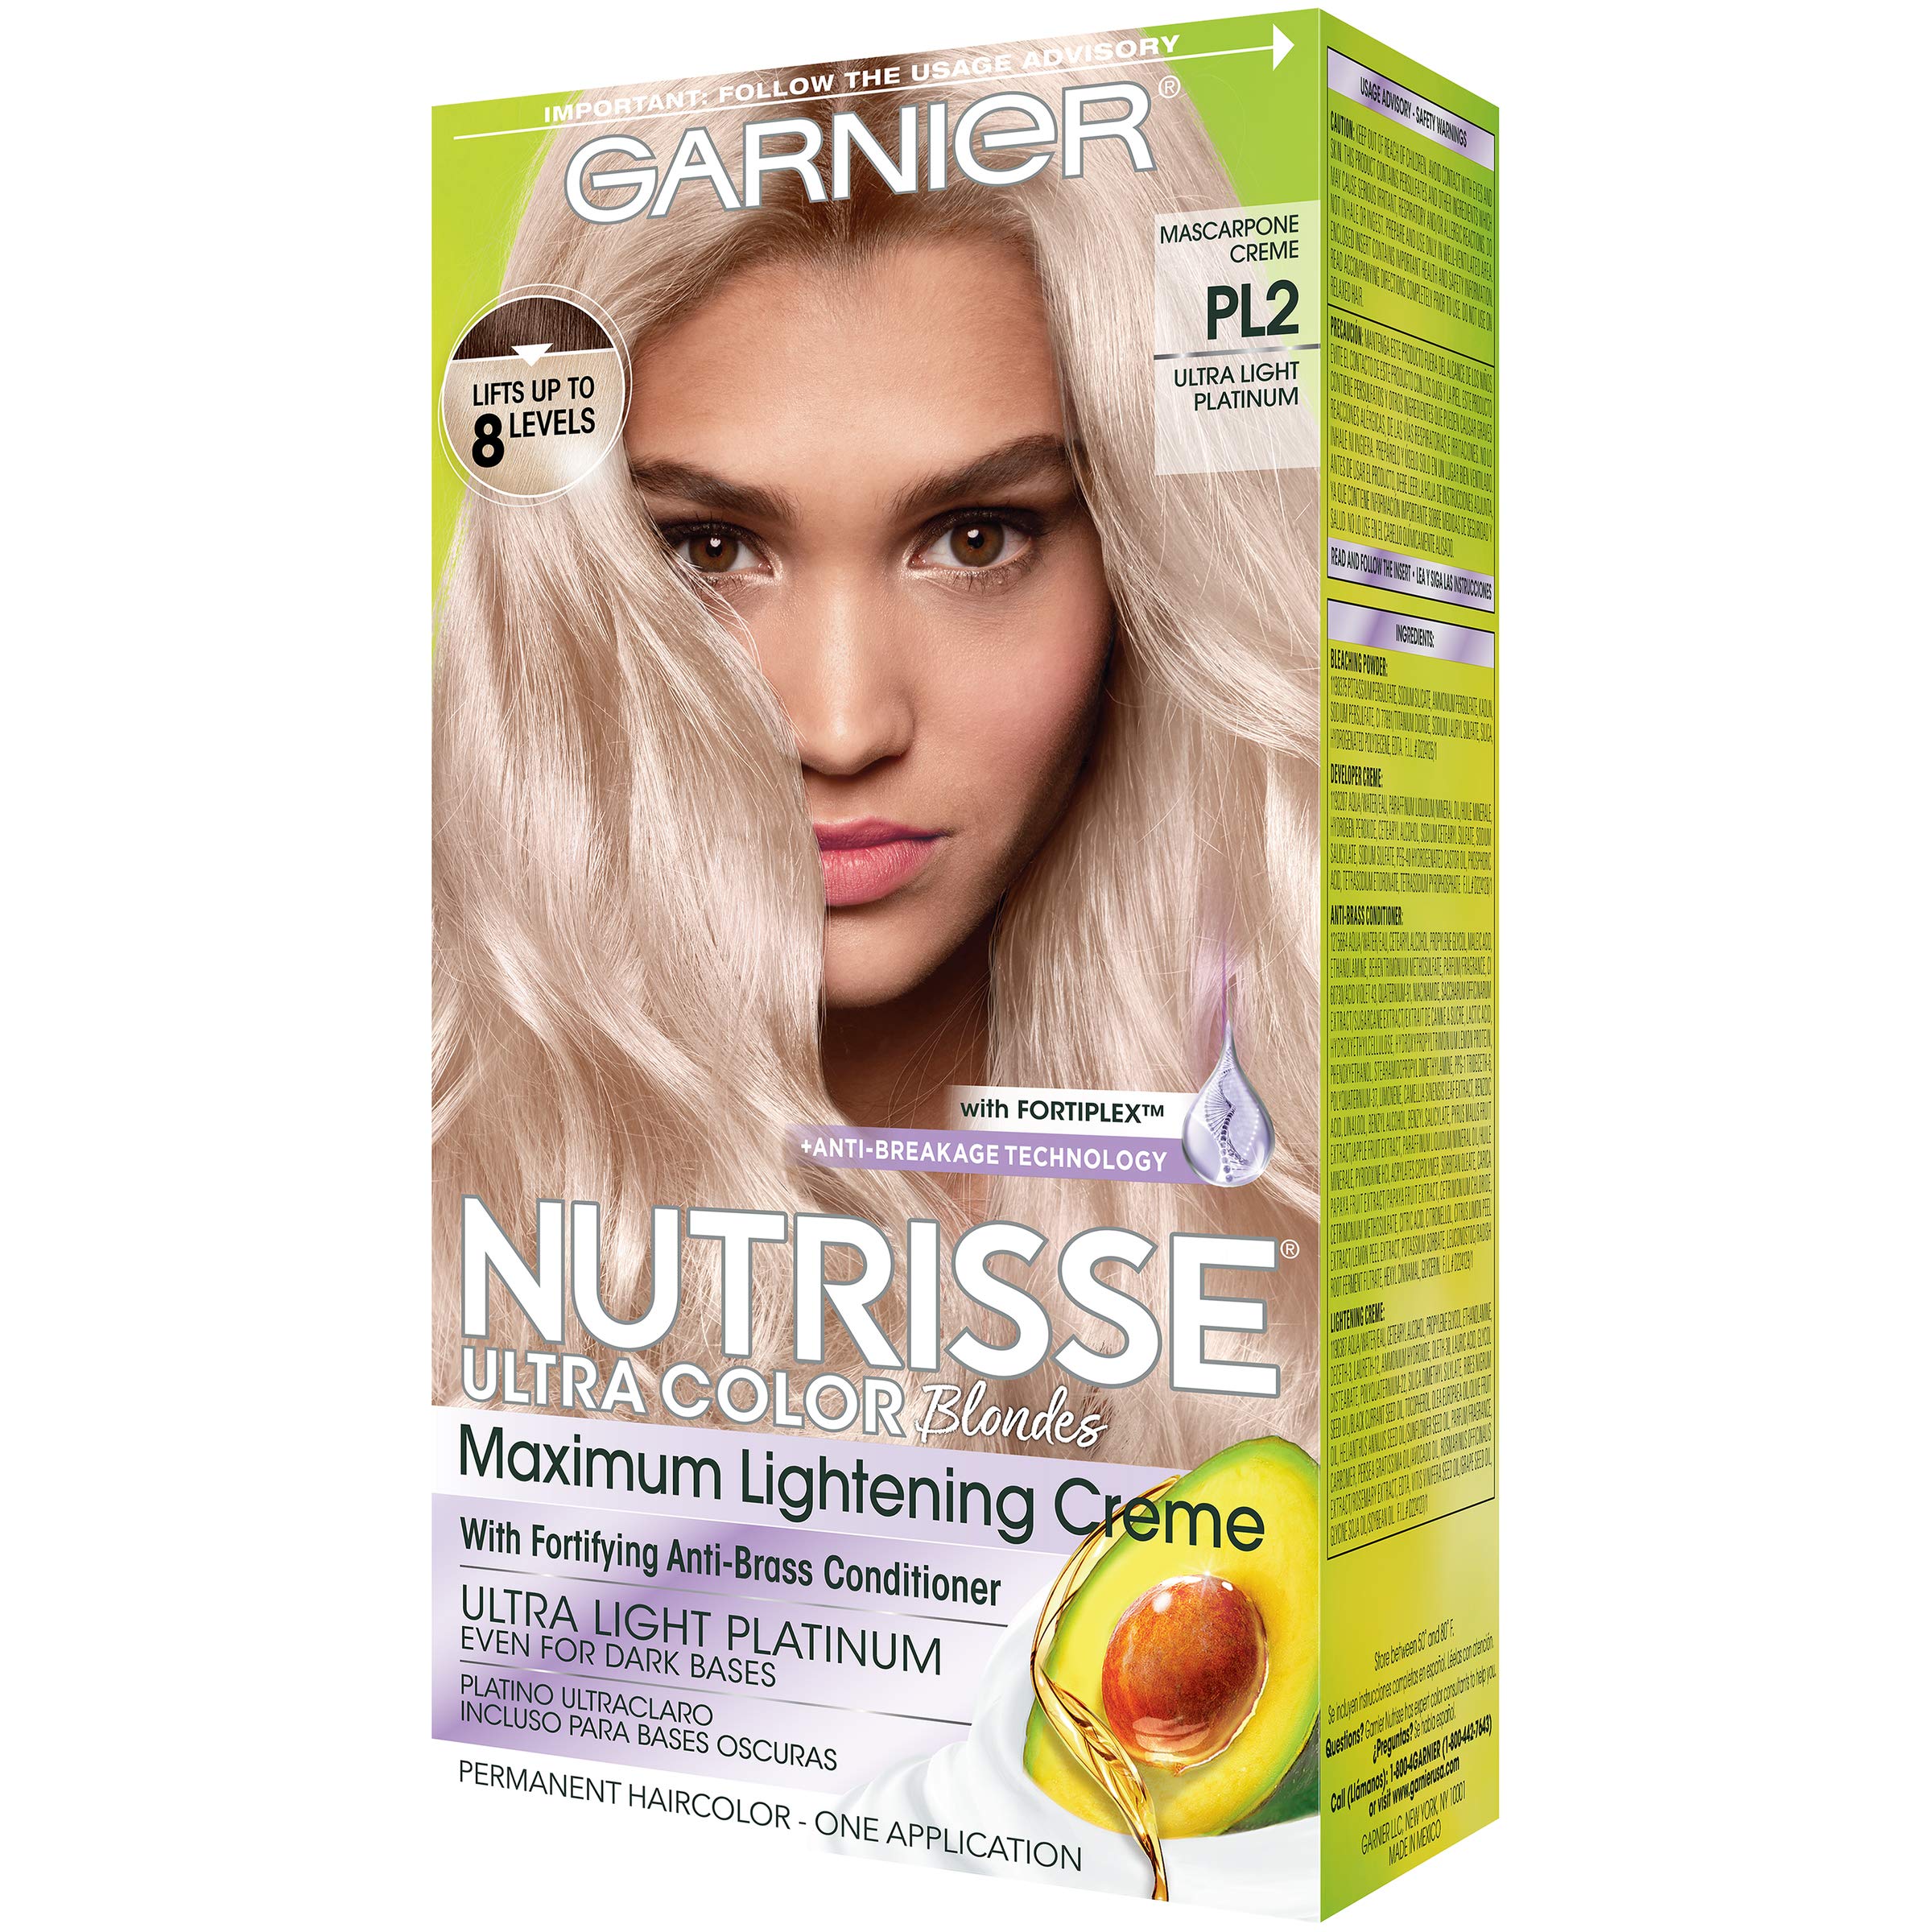 Garnier Hair Color Nutrisse Ultra Color Nourishing Hair Color Creme, Mascarpone Creme Pl2, 1 Count